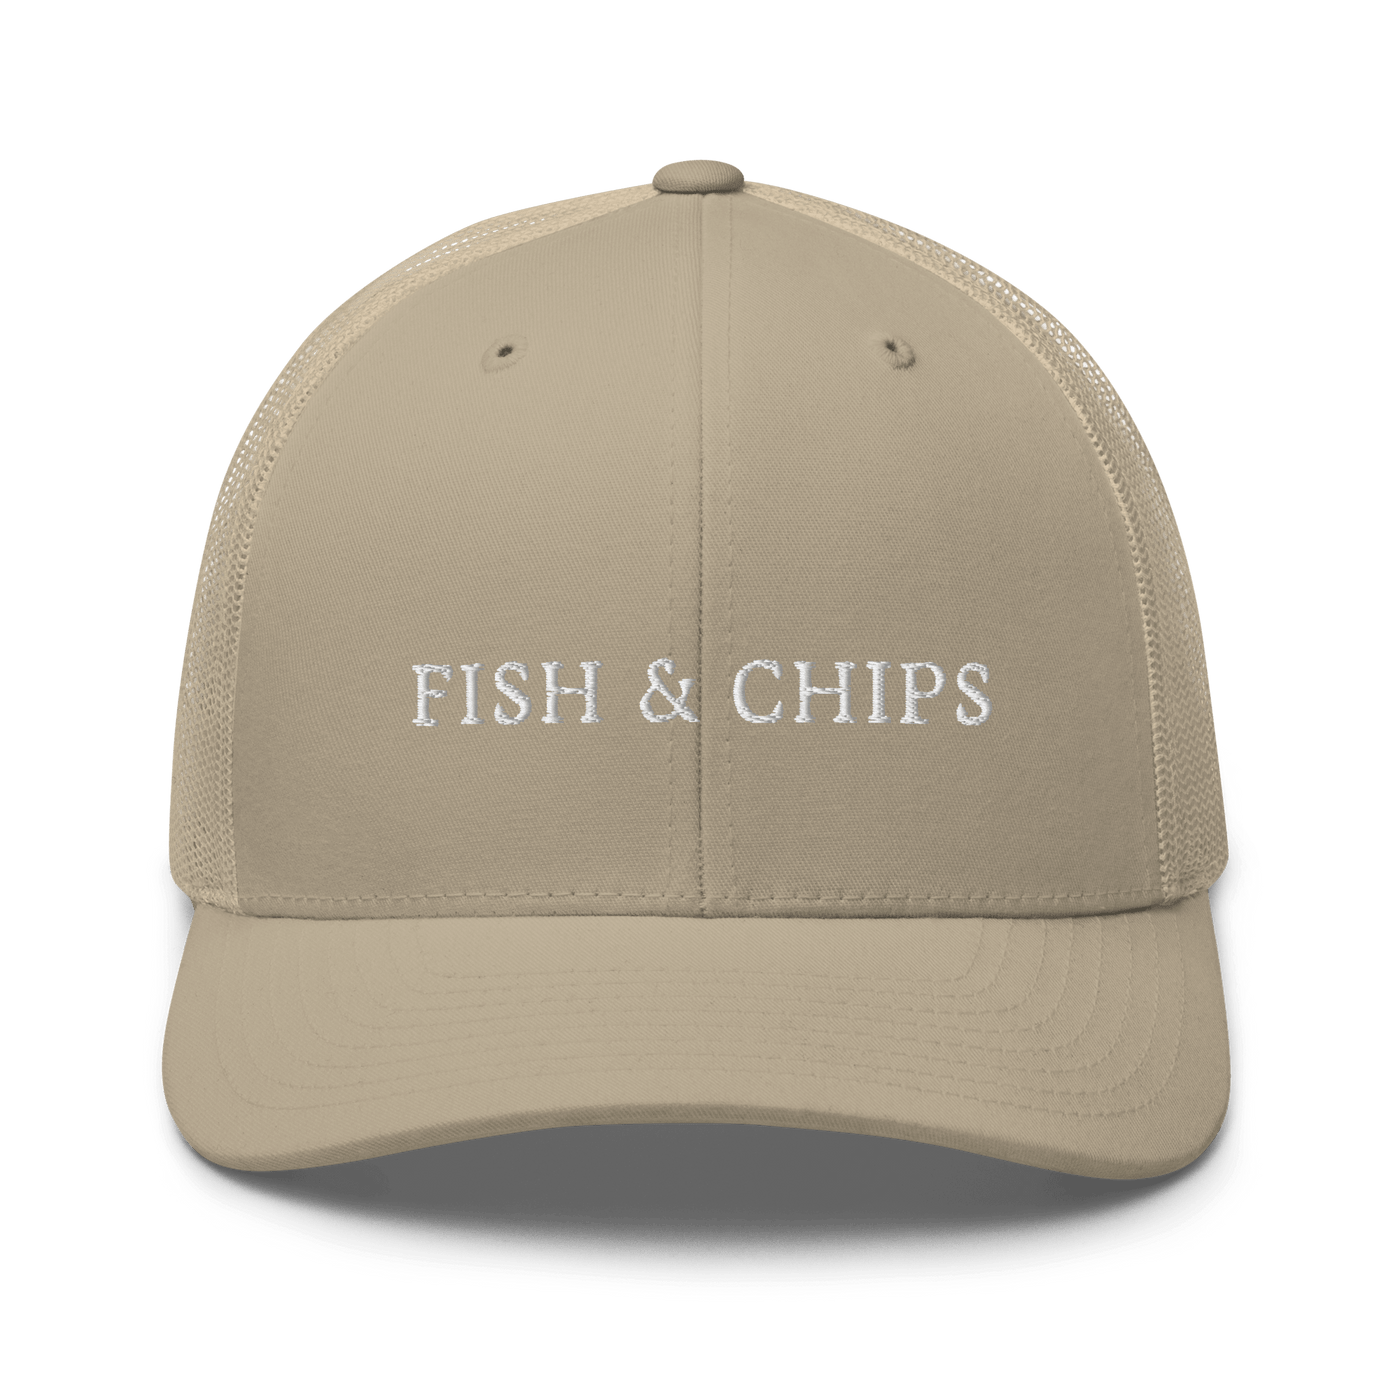 Fish & Chips Trucker Cap - Khaki - - Just Another Cap Store